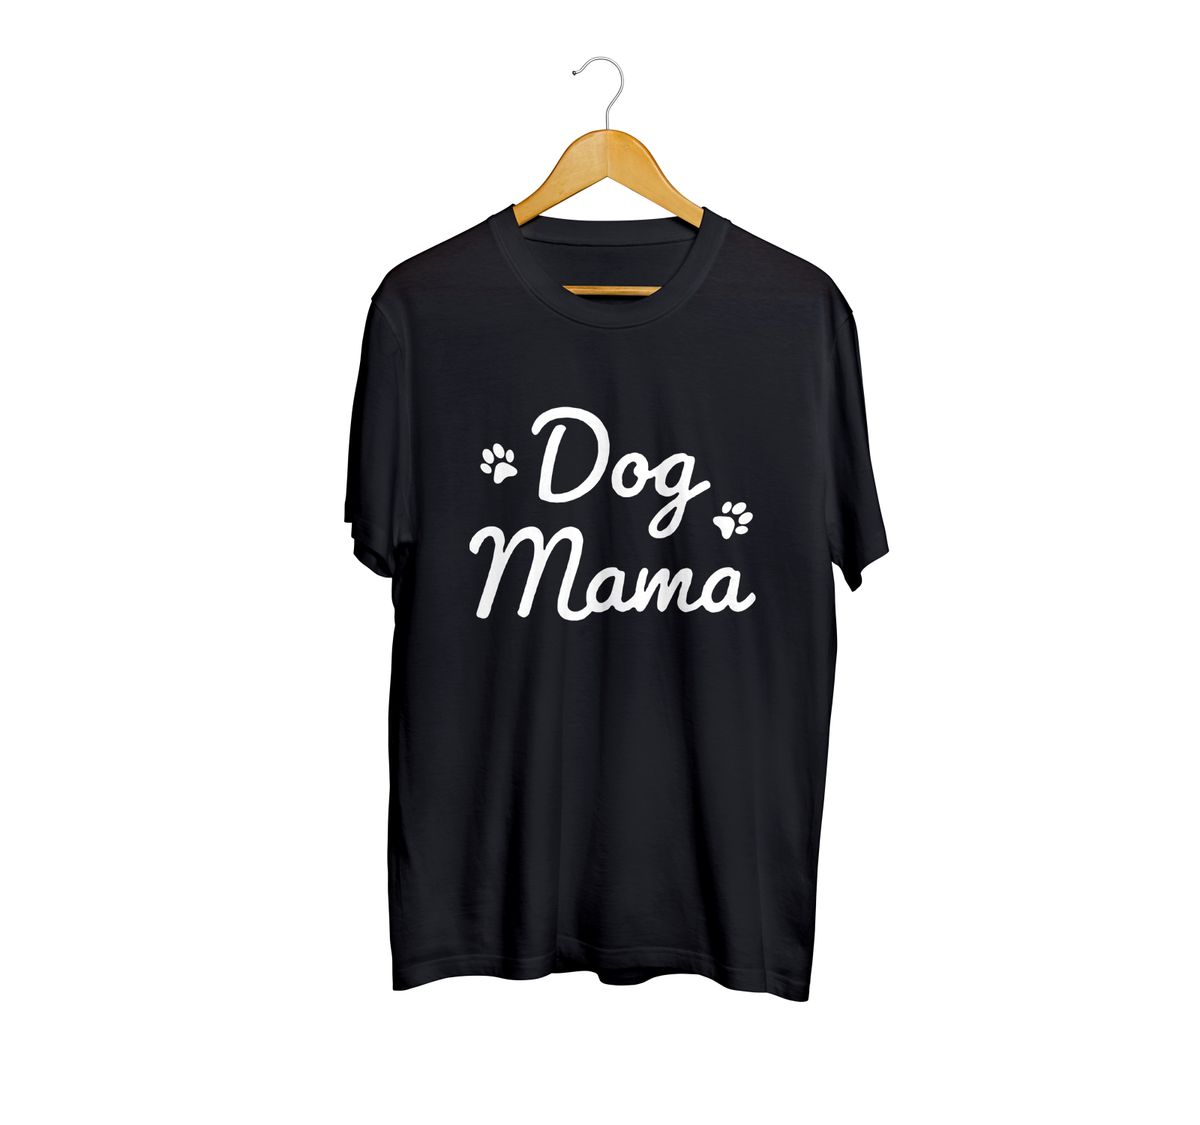 We Love Dogs Hub Black Dog Mama T-Shirt image 1